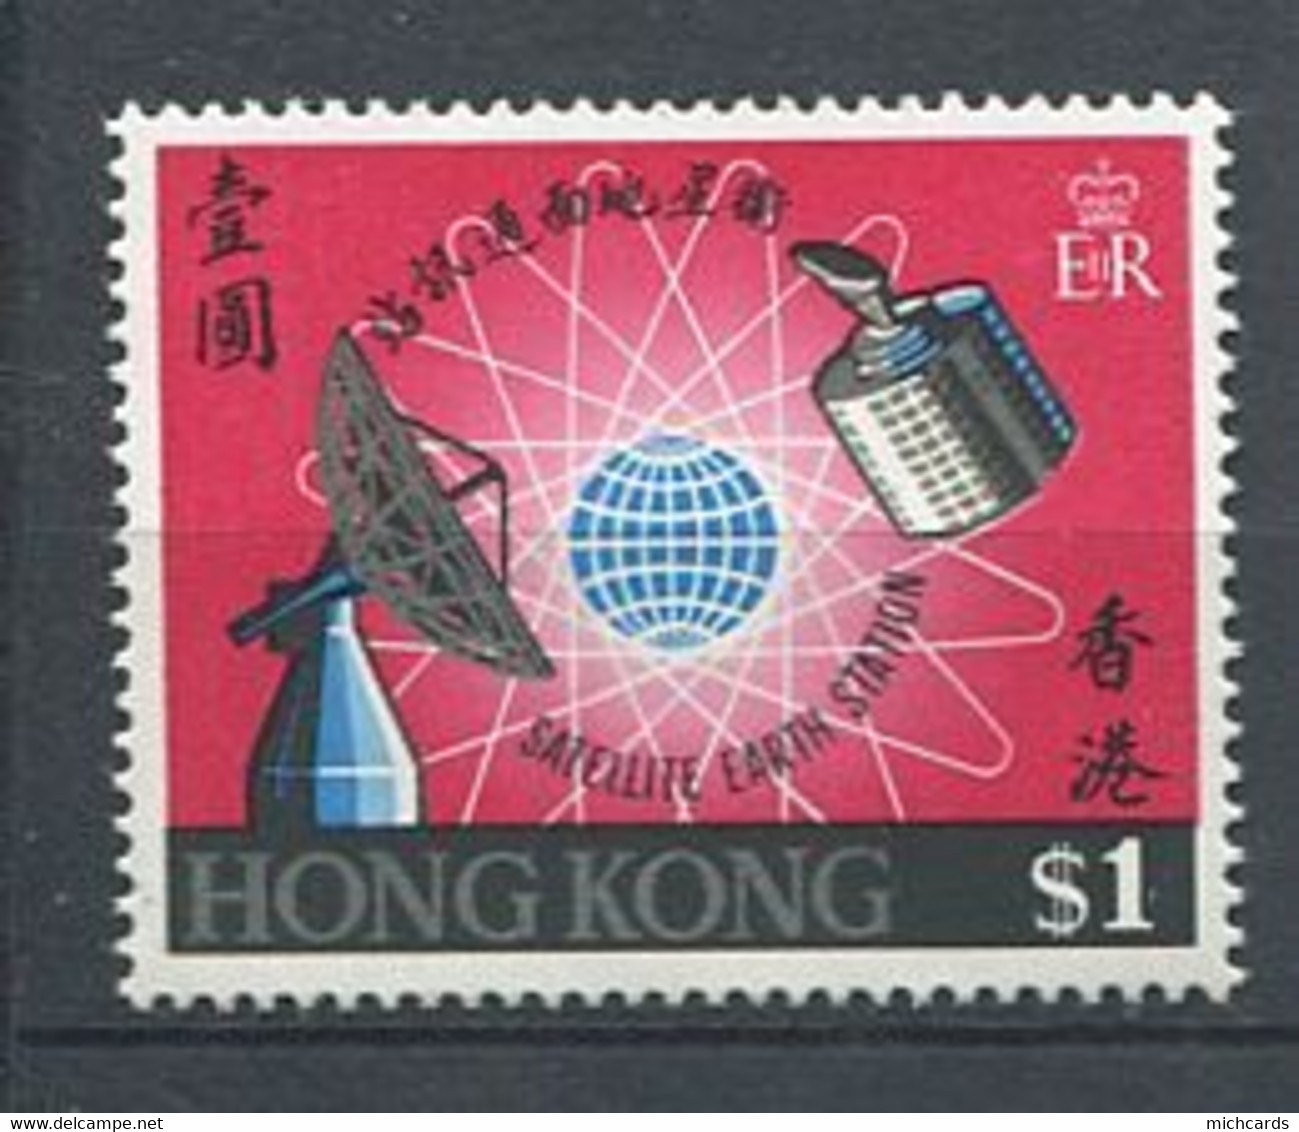 232 HONG KONG 1969 - Yvert 243 - Station Satellite Communication - Neuf ** (MNH) Sans Trace De Charniere - Ongebruikt